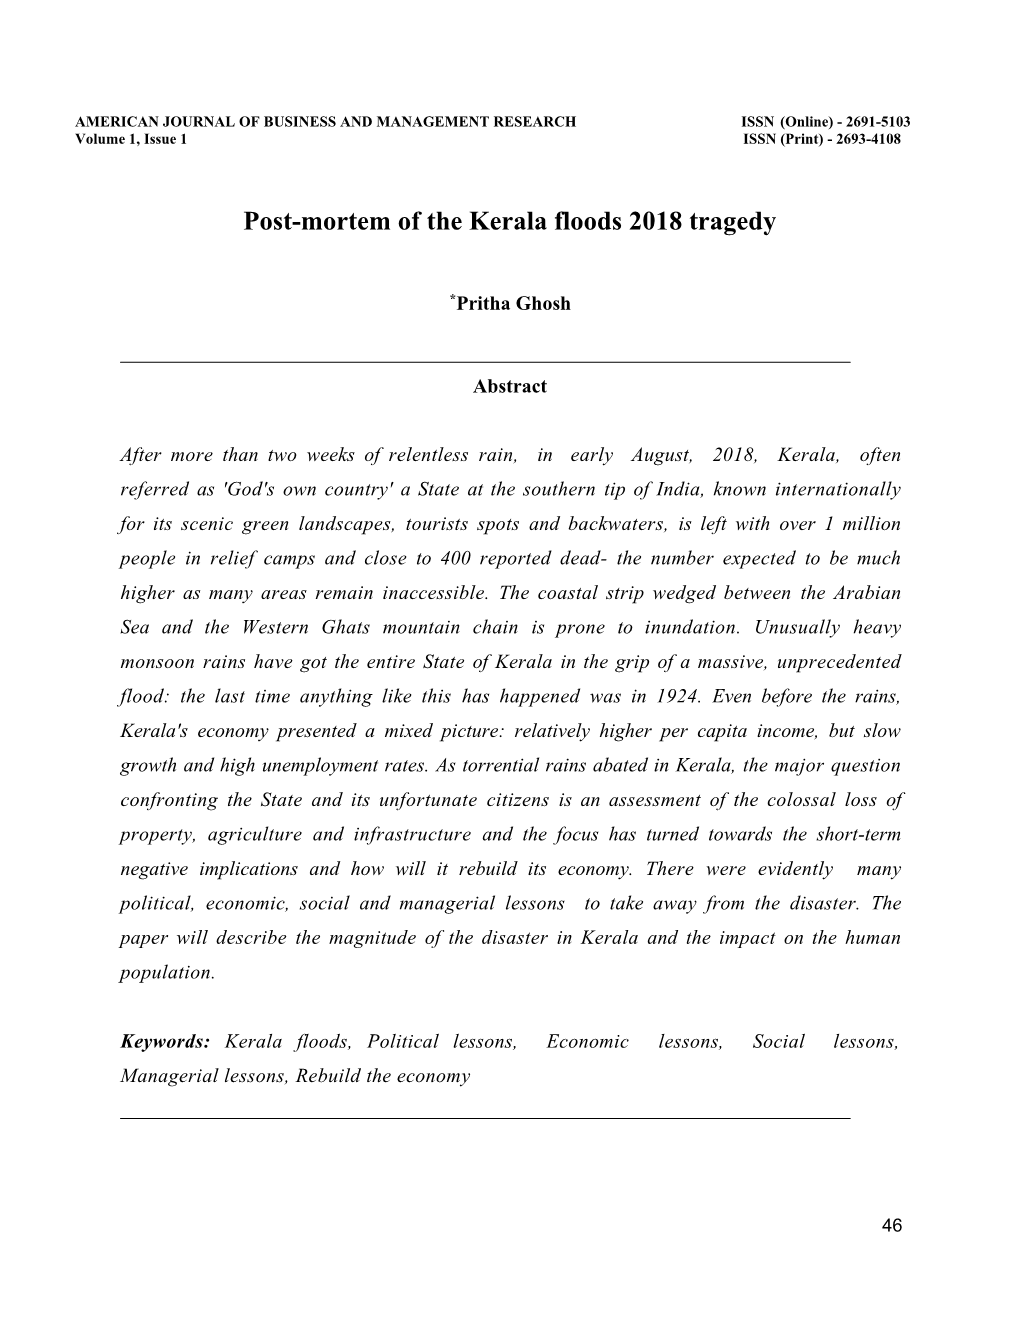 Post-Mortem of the Kerala Floods 2018 Tragedy